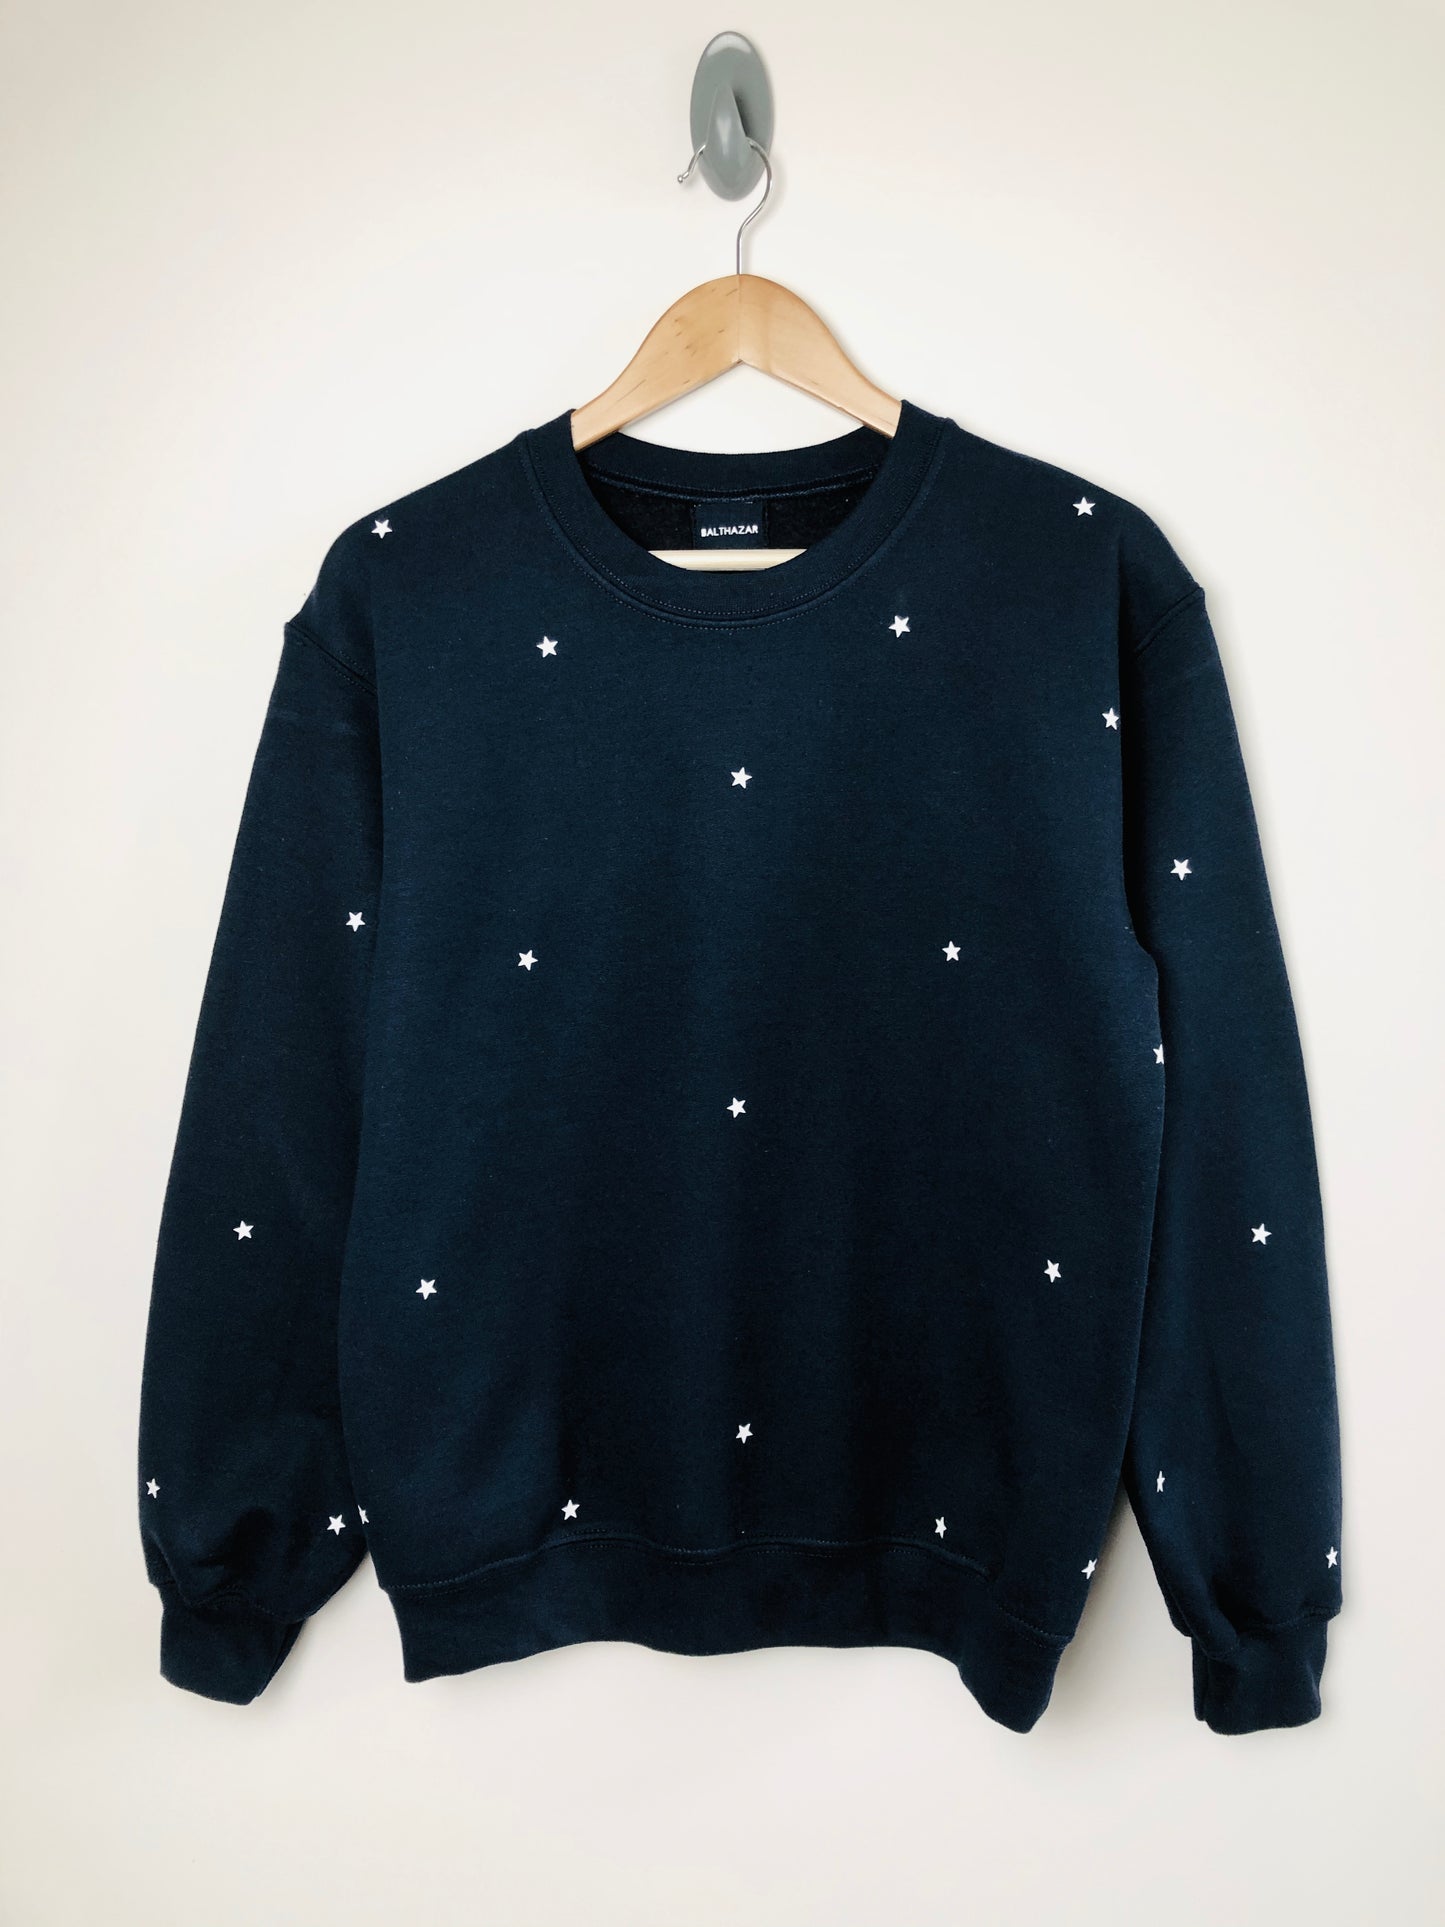 Miniature Star Sweatshirt - unisex